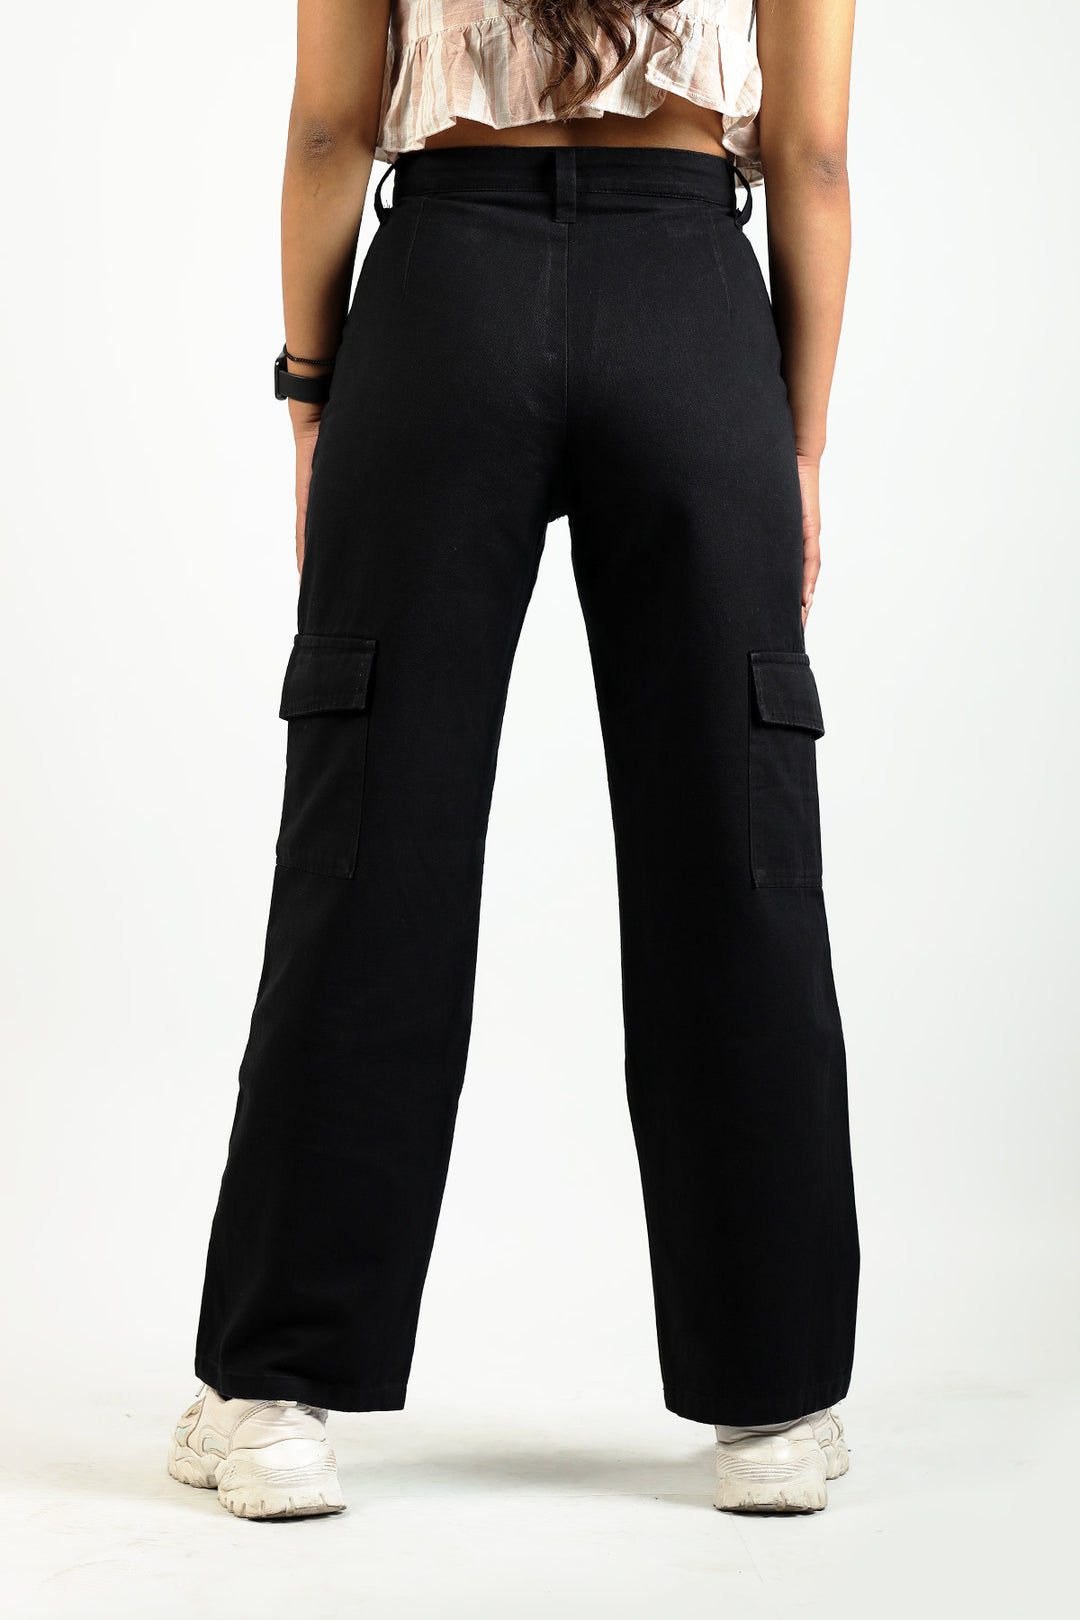 Fashionable Women's Cargo Jeans Black